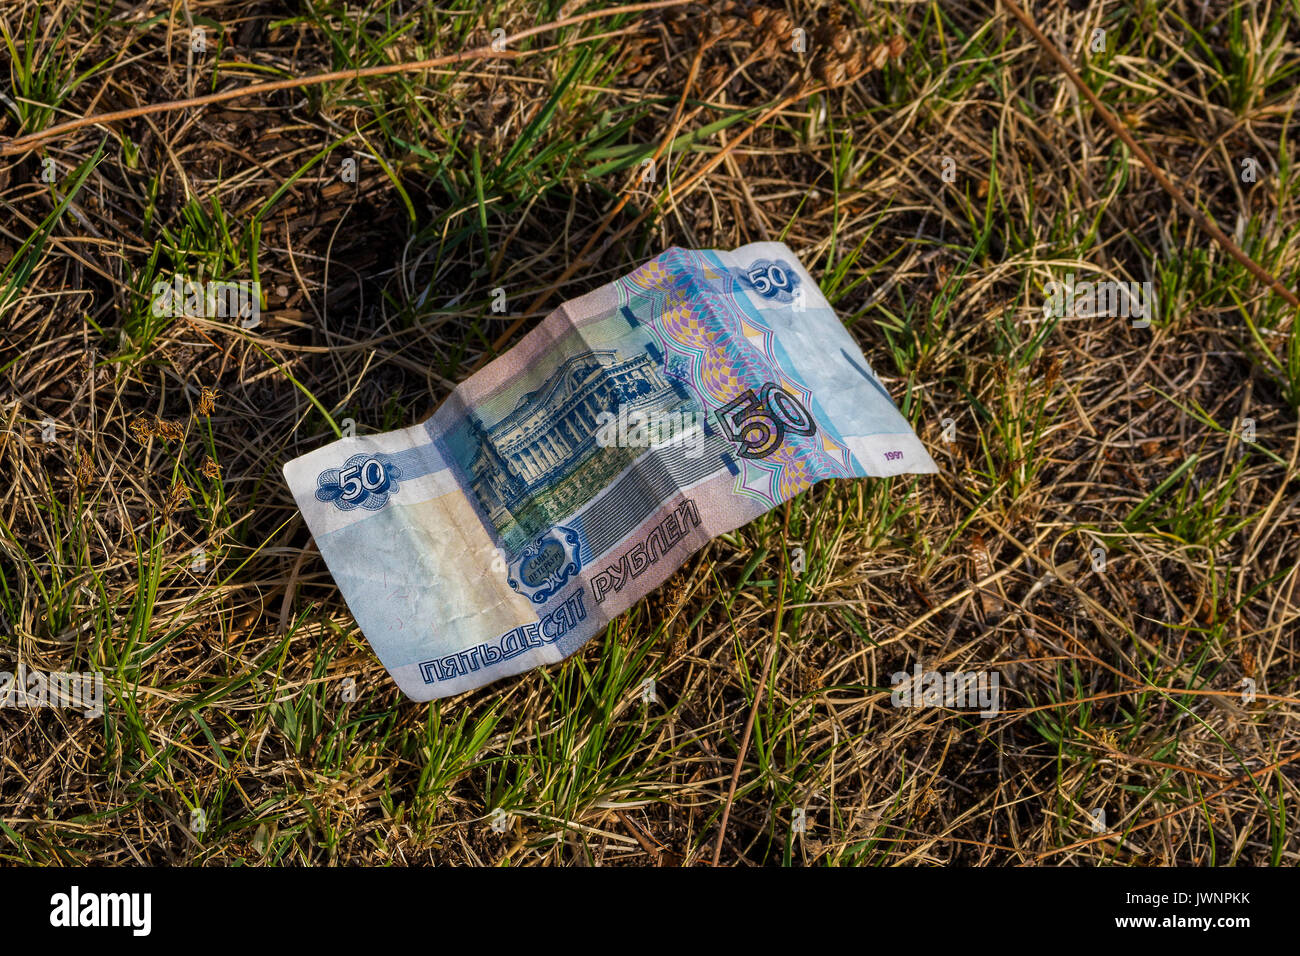 fifty rRussian monetary crumpled bill lying on the ground. Fifty rubles lying on the grass. Monetary lossoubles bill lie on the ground or grass . The  Stock Photo